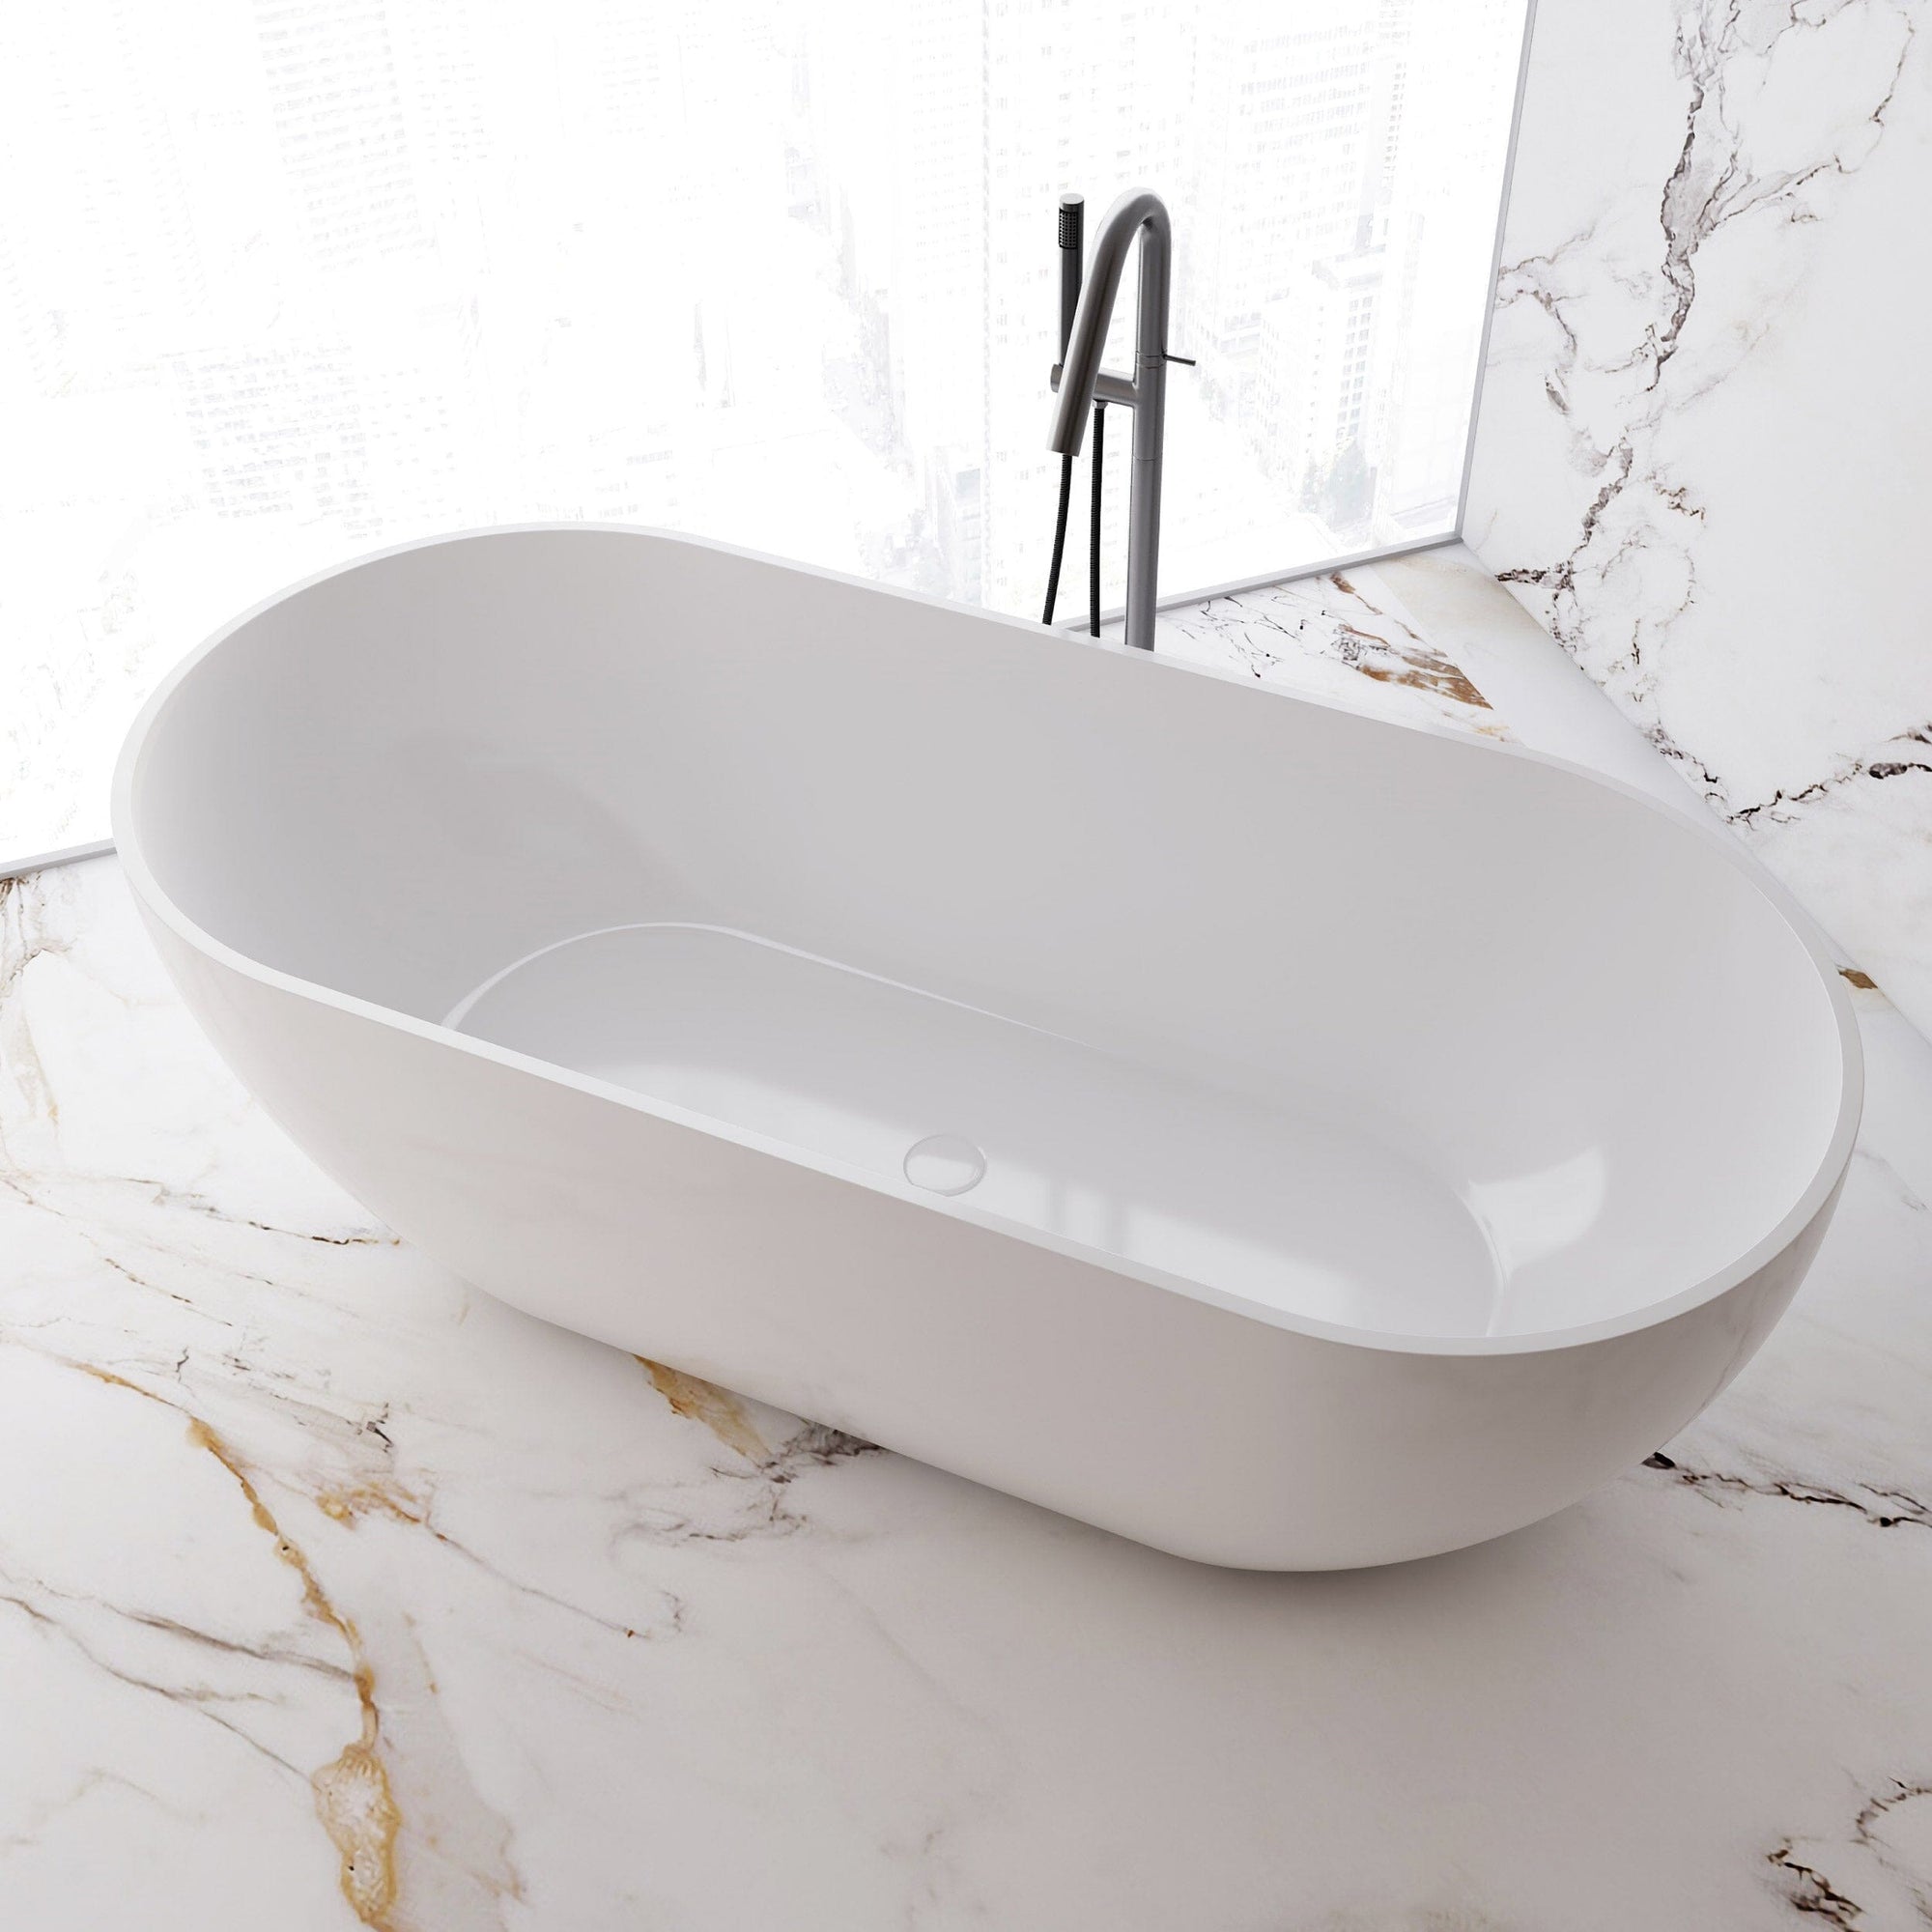 Ciao 1400mm Oval Free Standing Acrylic Bathtub Gloss White Baths AROVA 